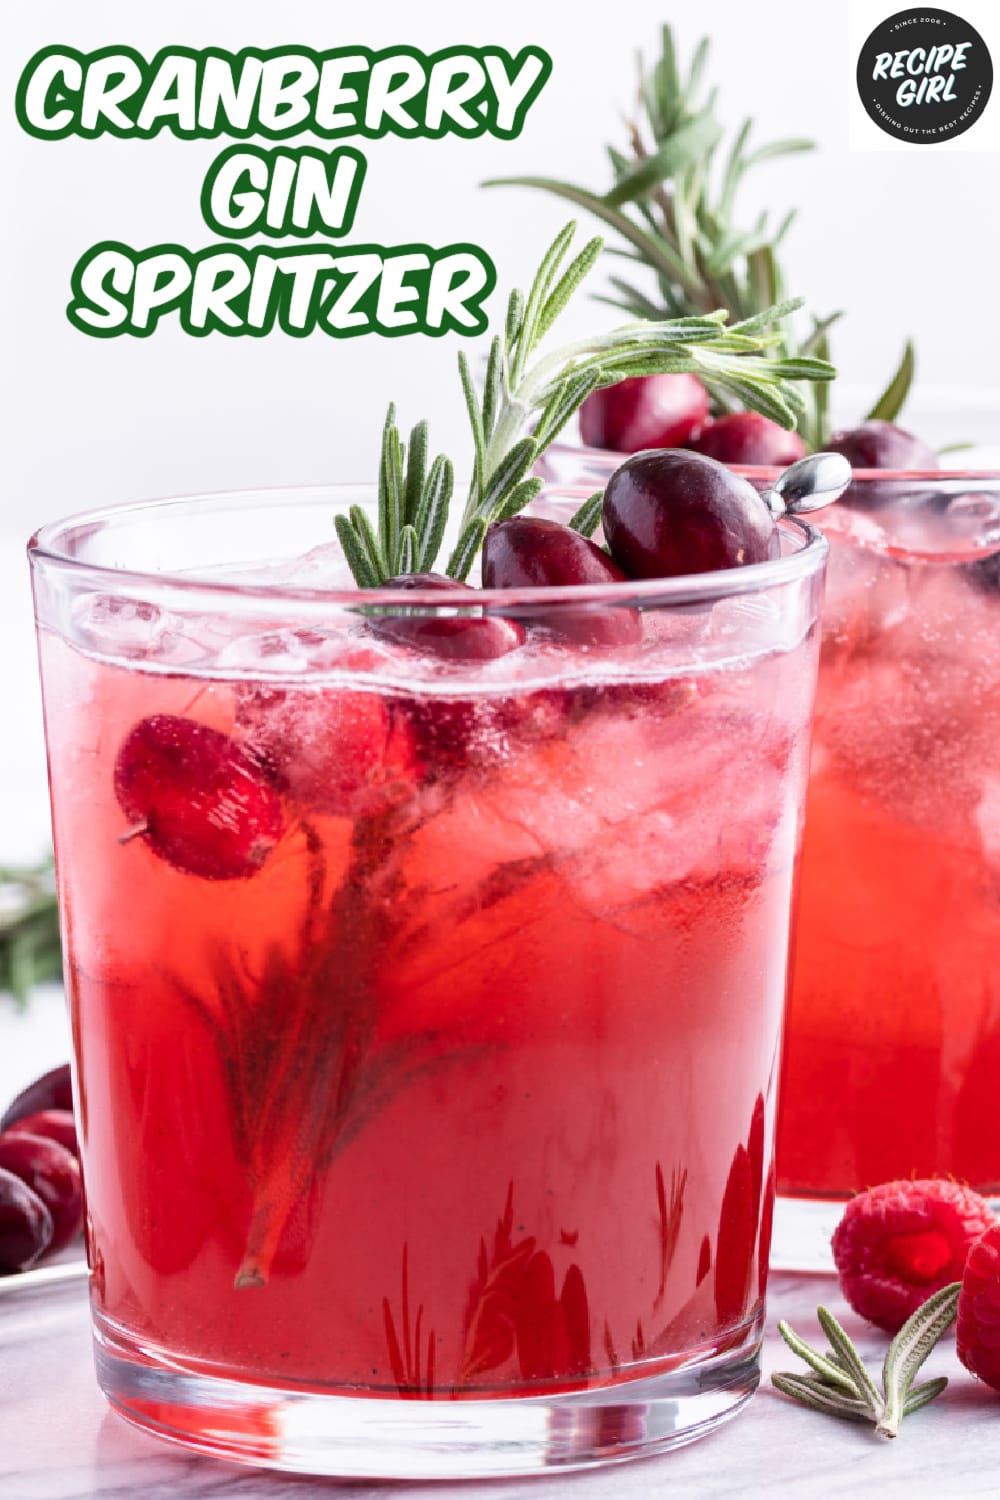 Cranberry Gin Spritzer Recipe Girl®